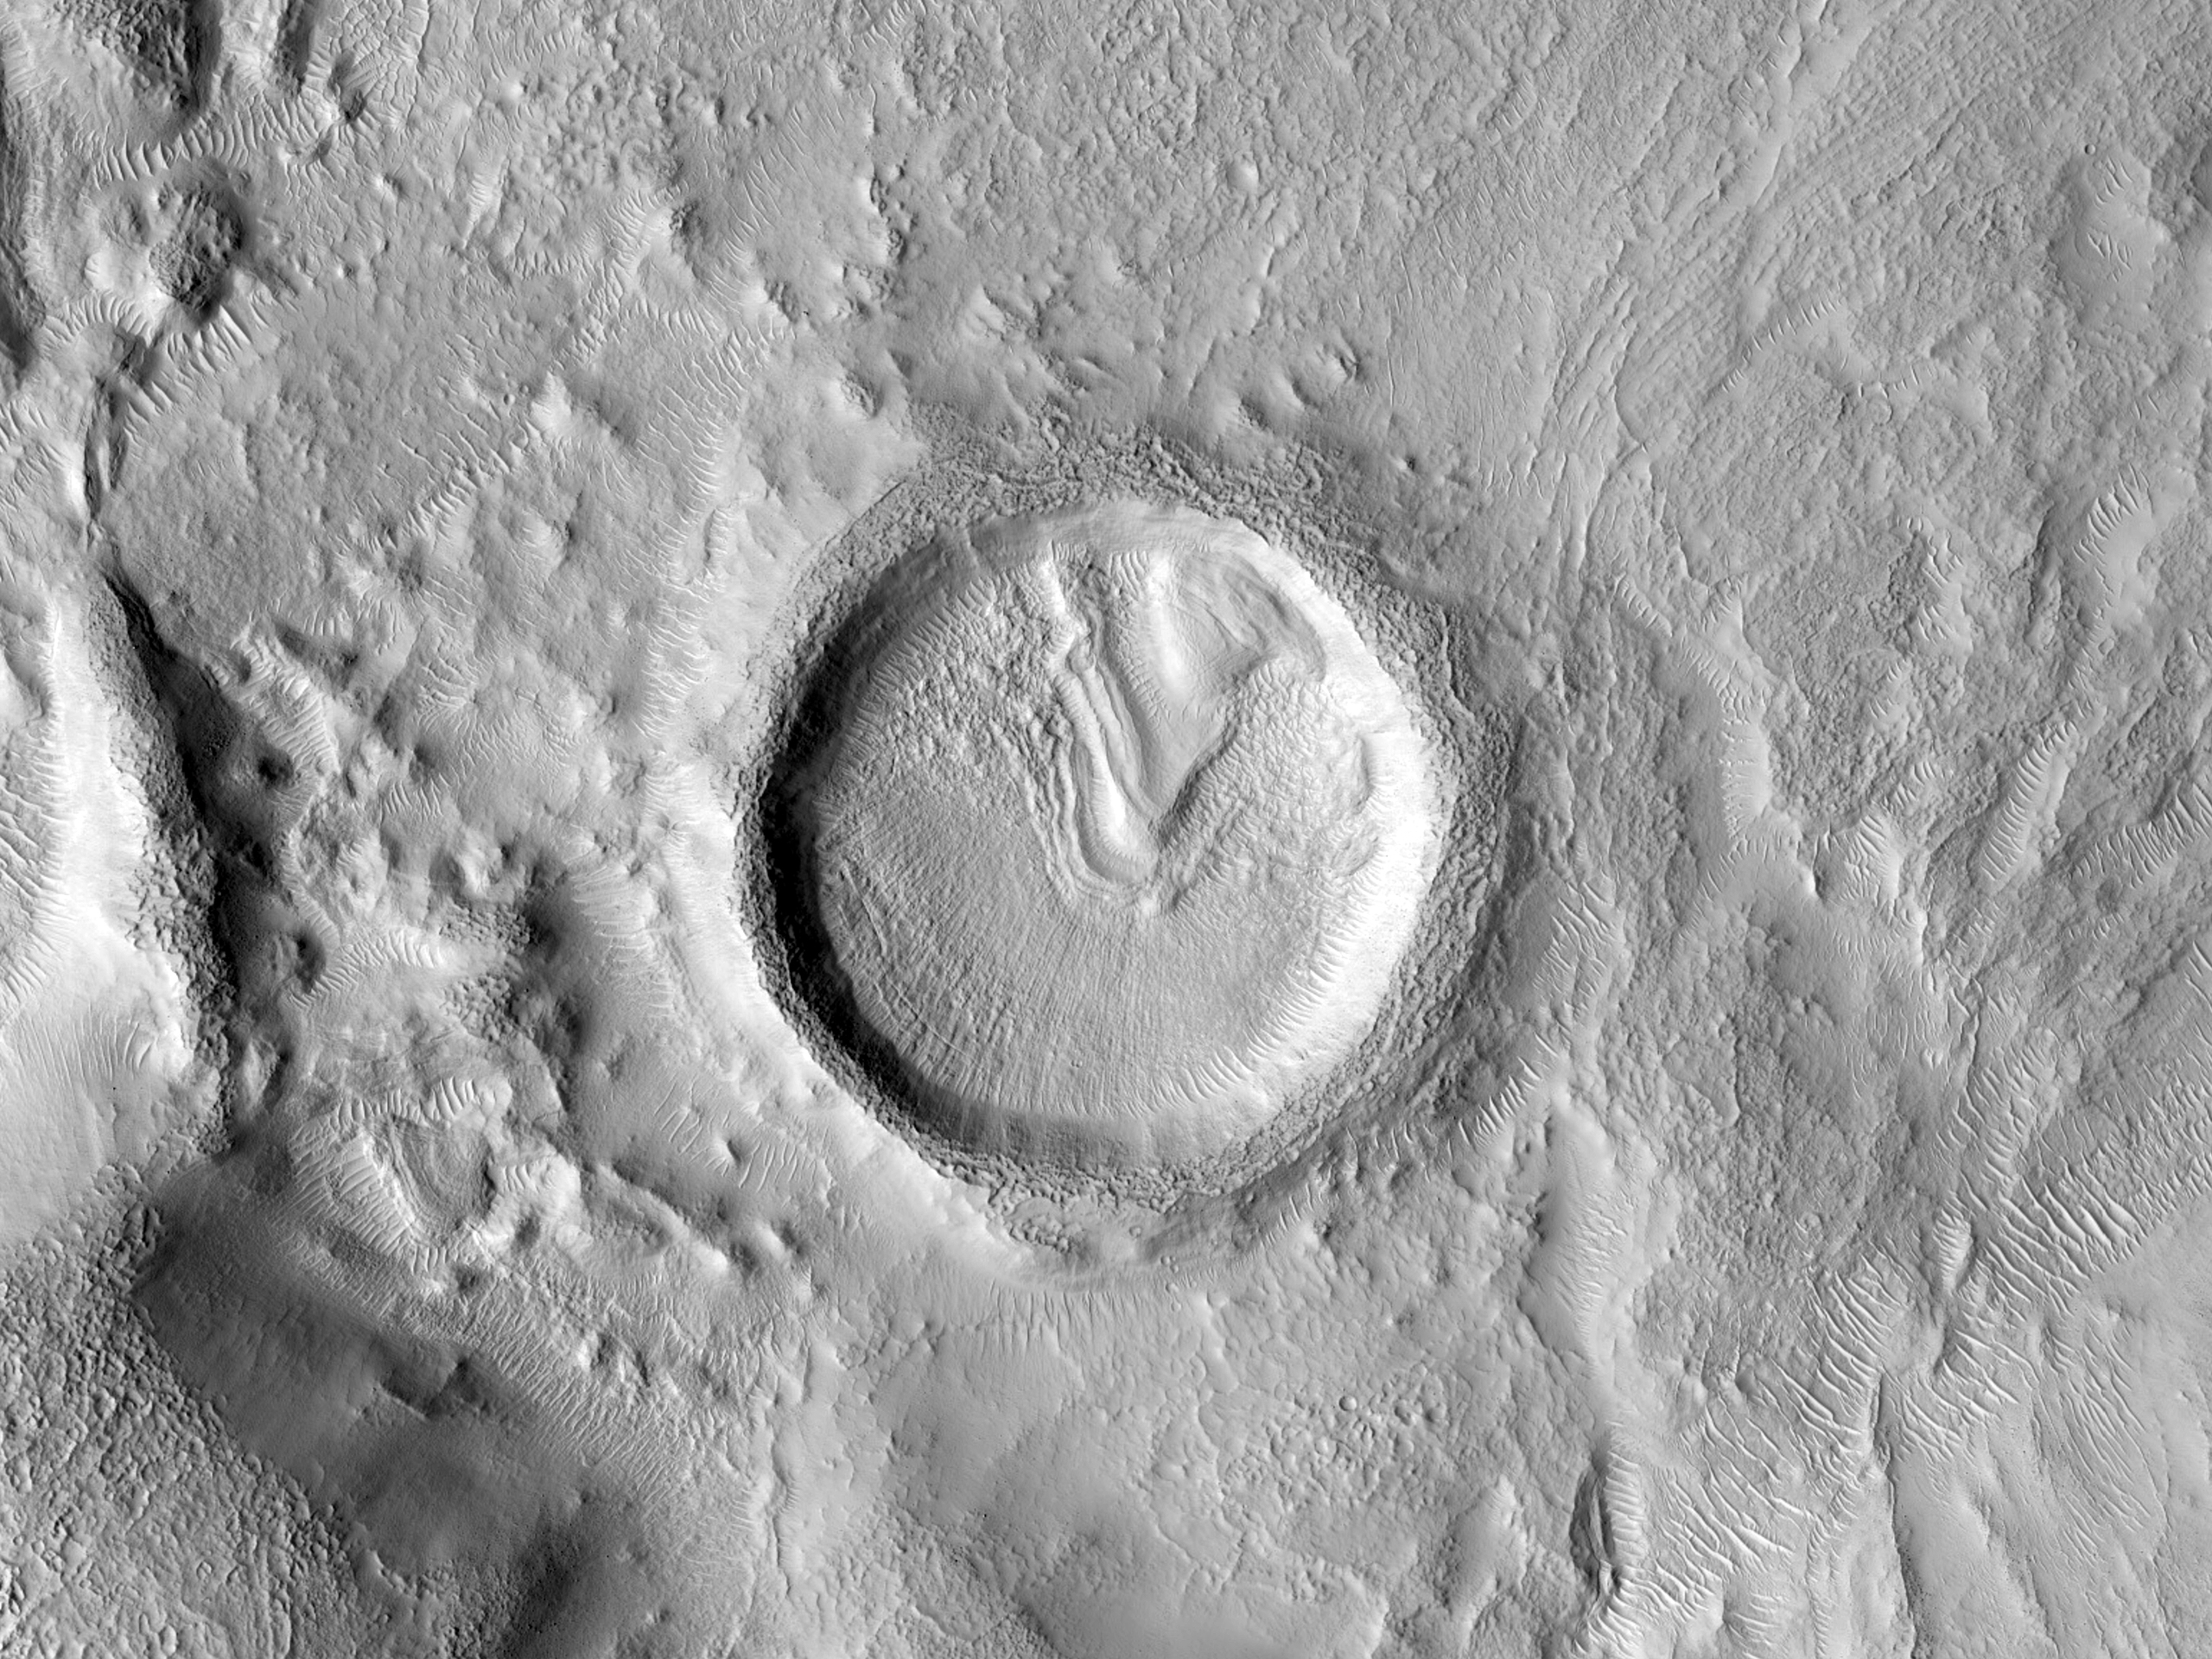 Flow Moving through Crater in Nilosyrtis Mensae